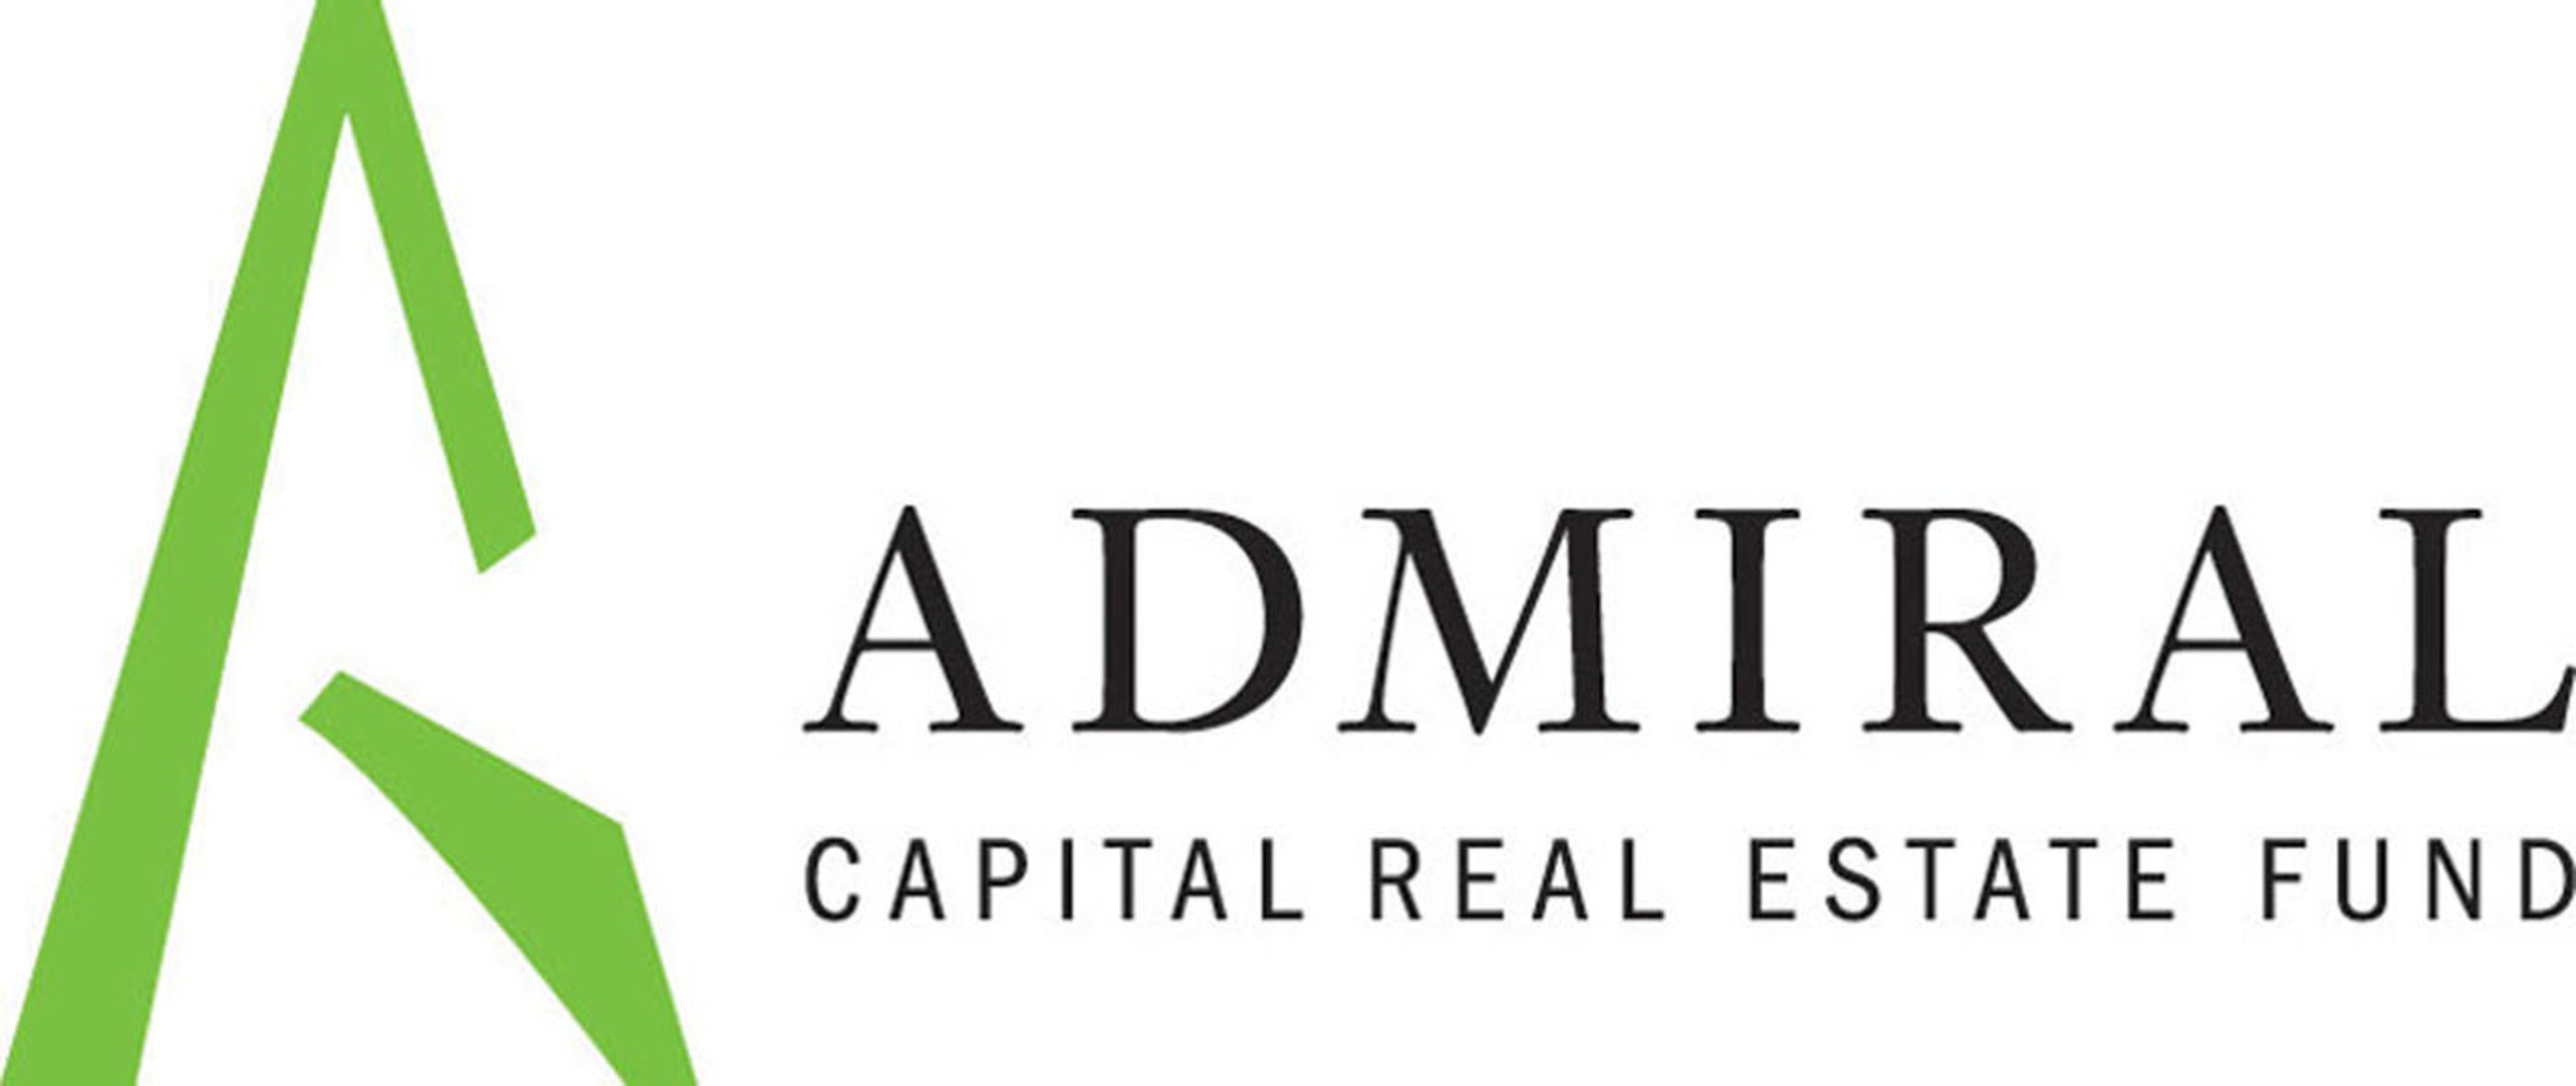 Admiral Capital Real Estate Fund logo.